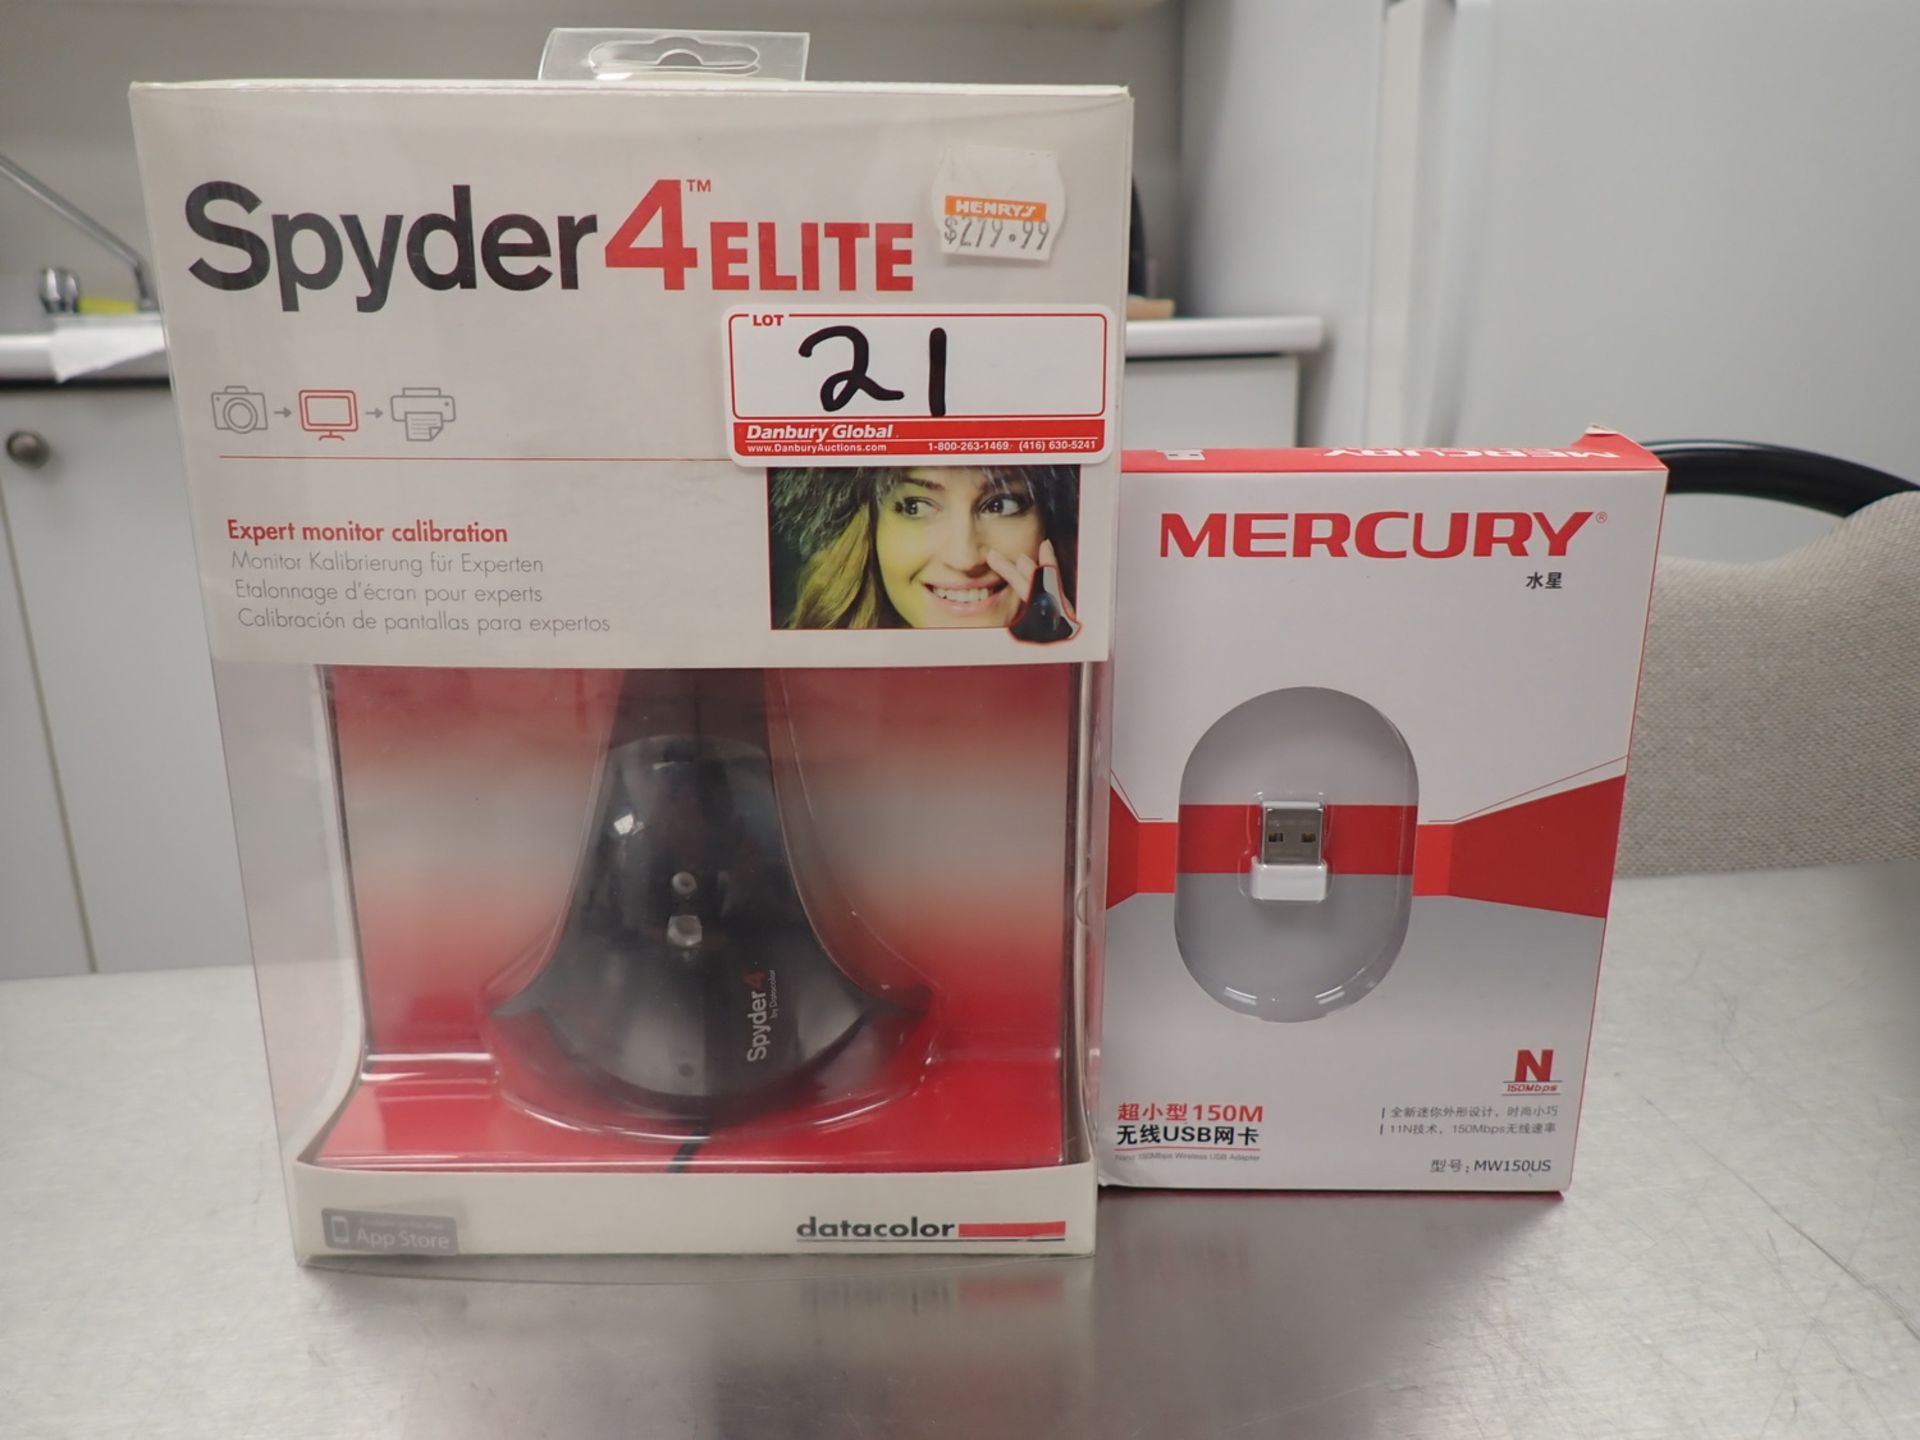 LOT - SPYDER 4 ELITE MOUSE W/ MERCURY MW150US USB